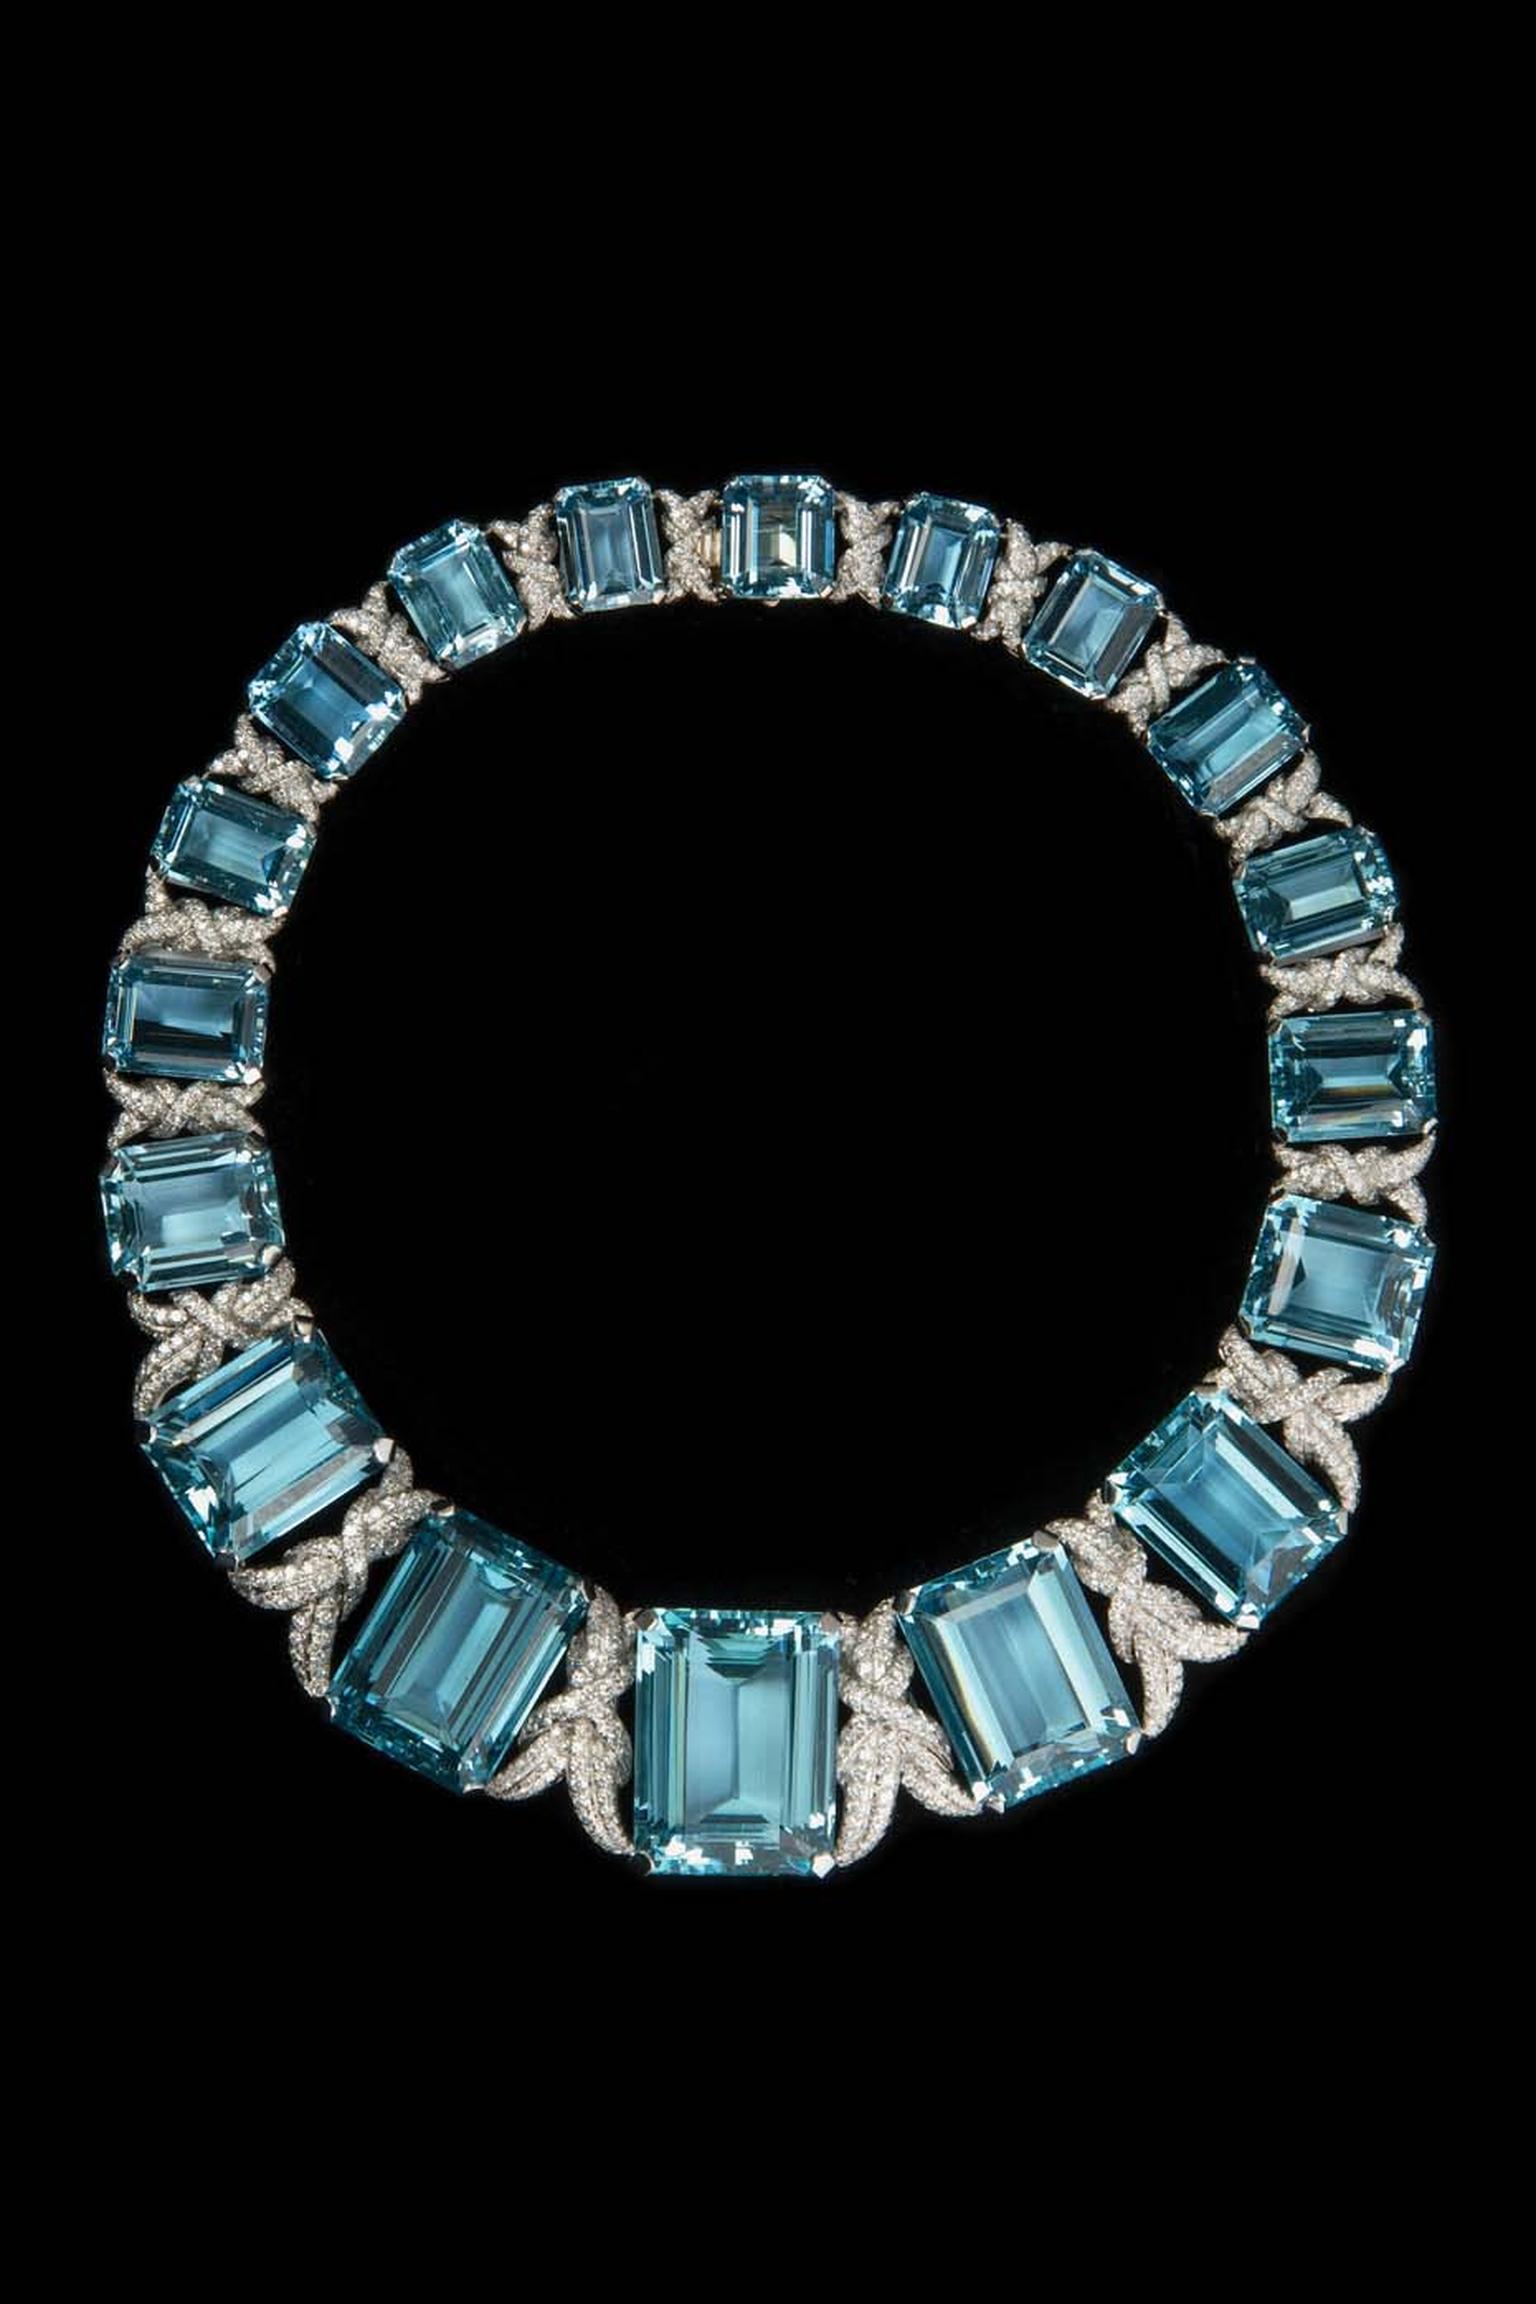 Verdura aquamarine and diamond necklace dating from 1993.